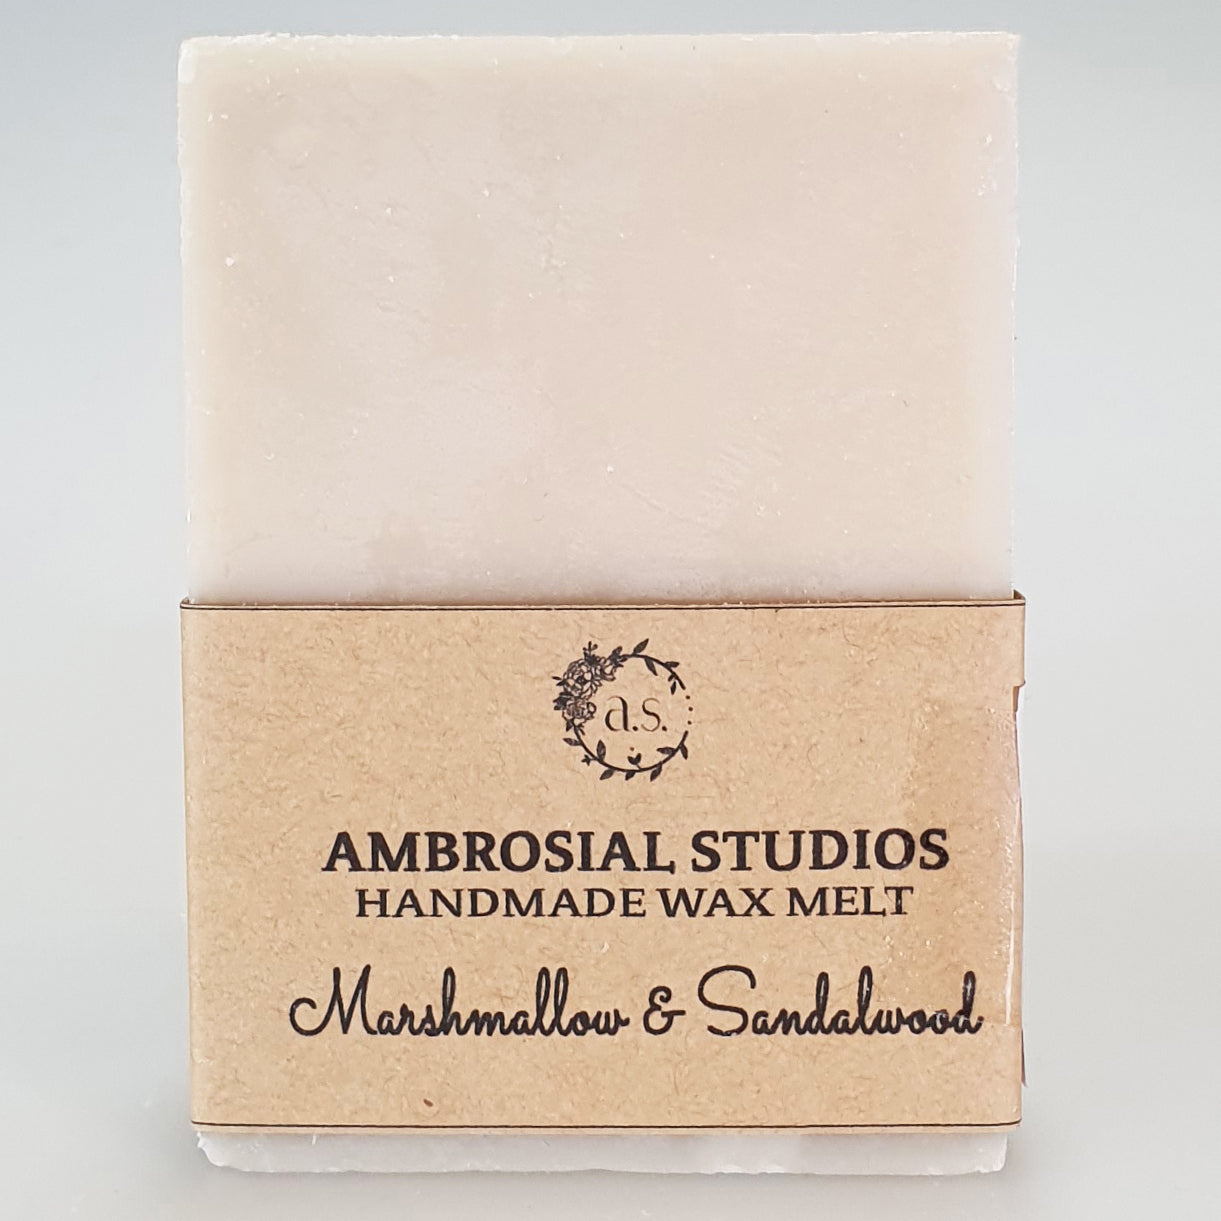 Ambrosial Studios - Handmade Wax Melt - Marshmallow and Sandalwood